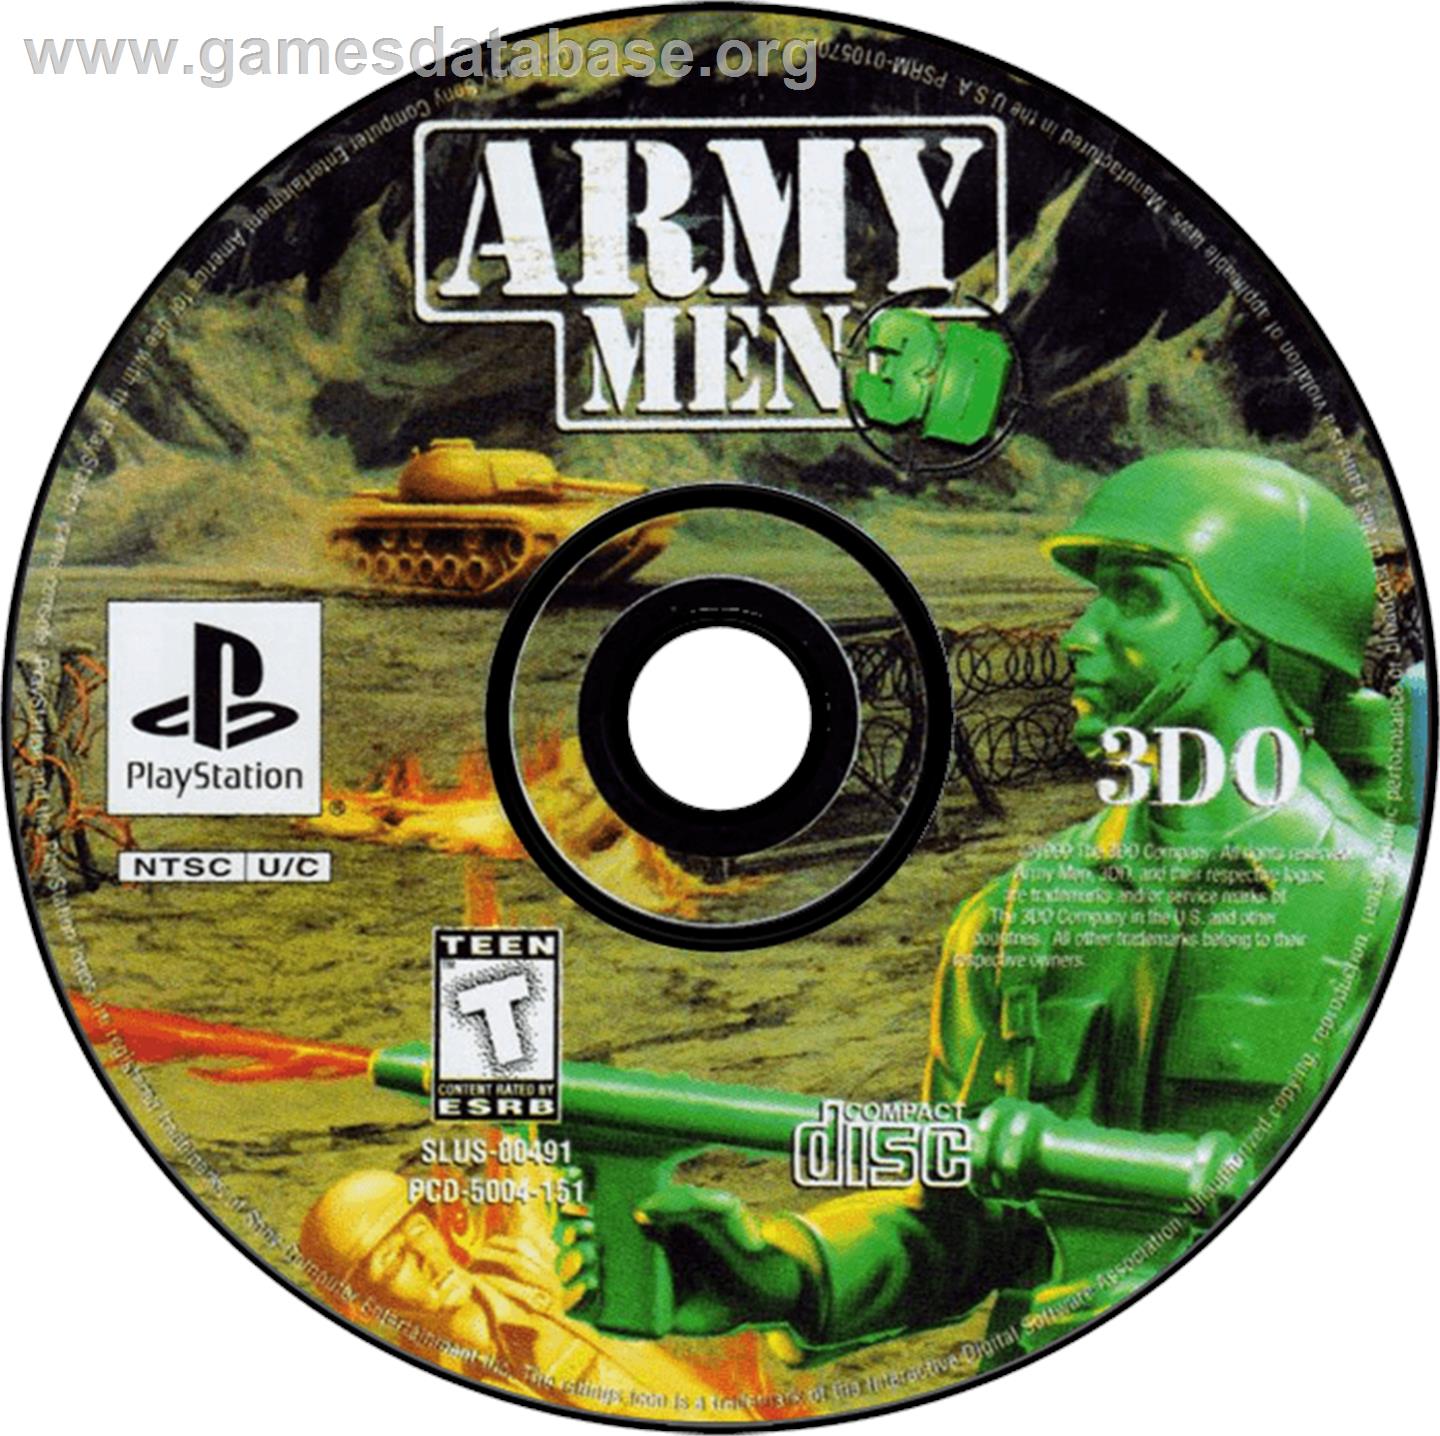 Army Men 3D - Sony Playstation - Artwork - Disc